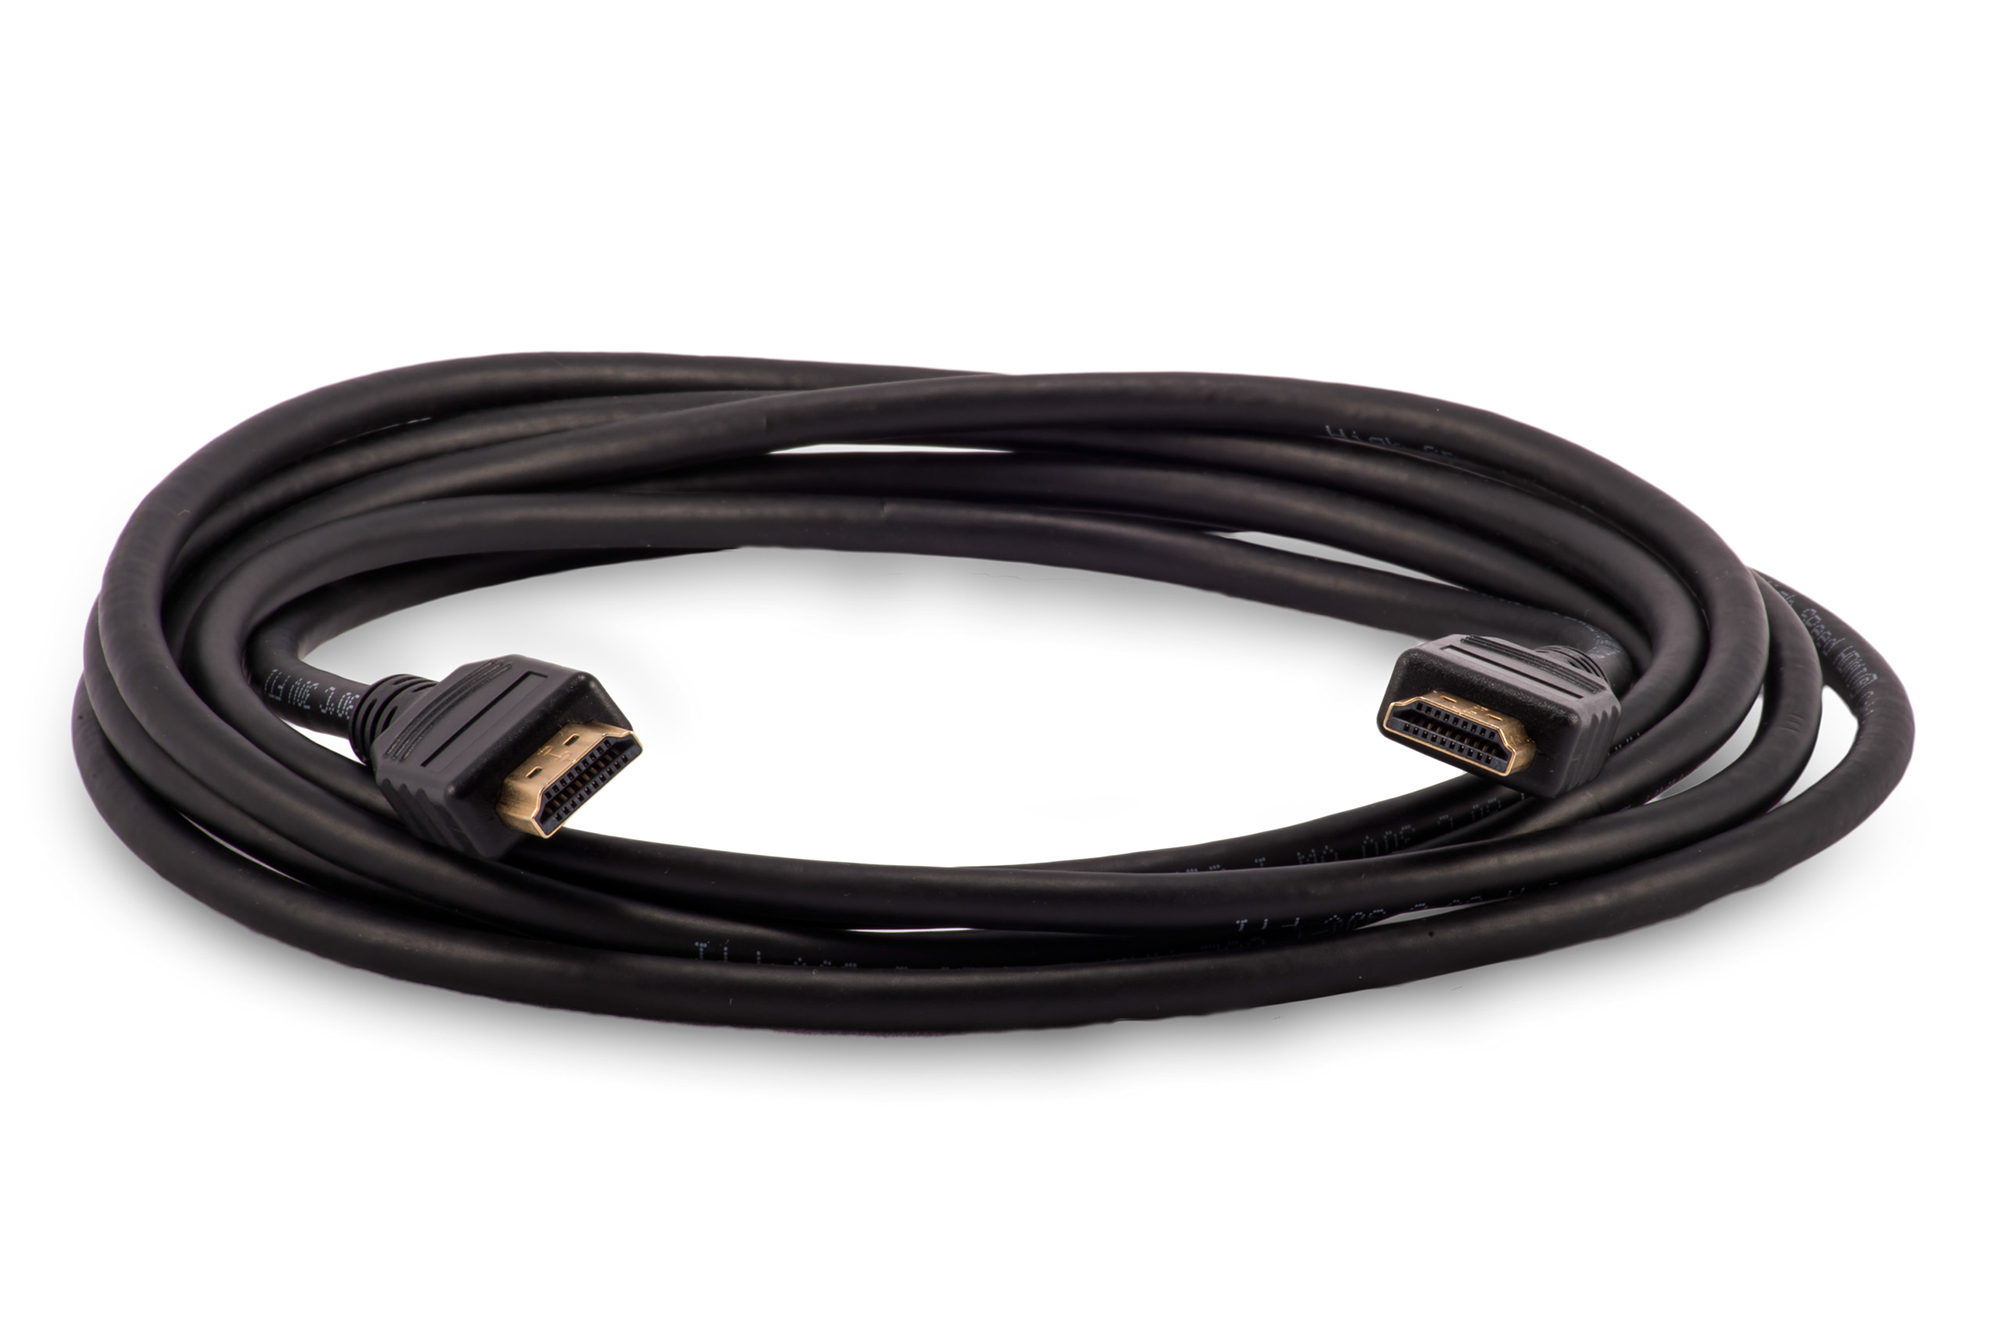 Beroligende middel Whirlpool Ni 4k2k 6 Foot HDMI Cable